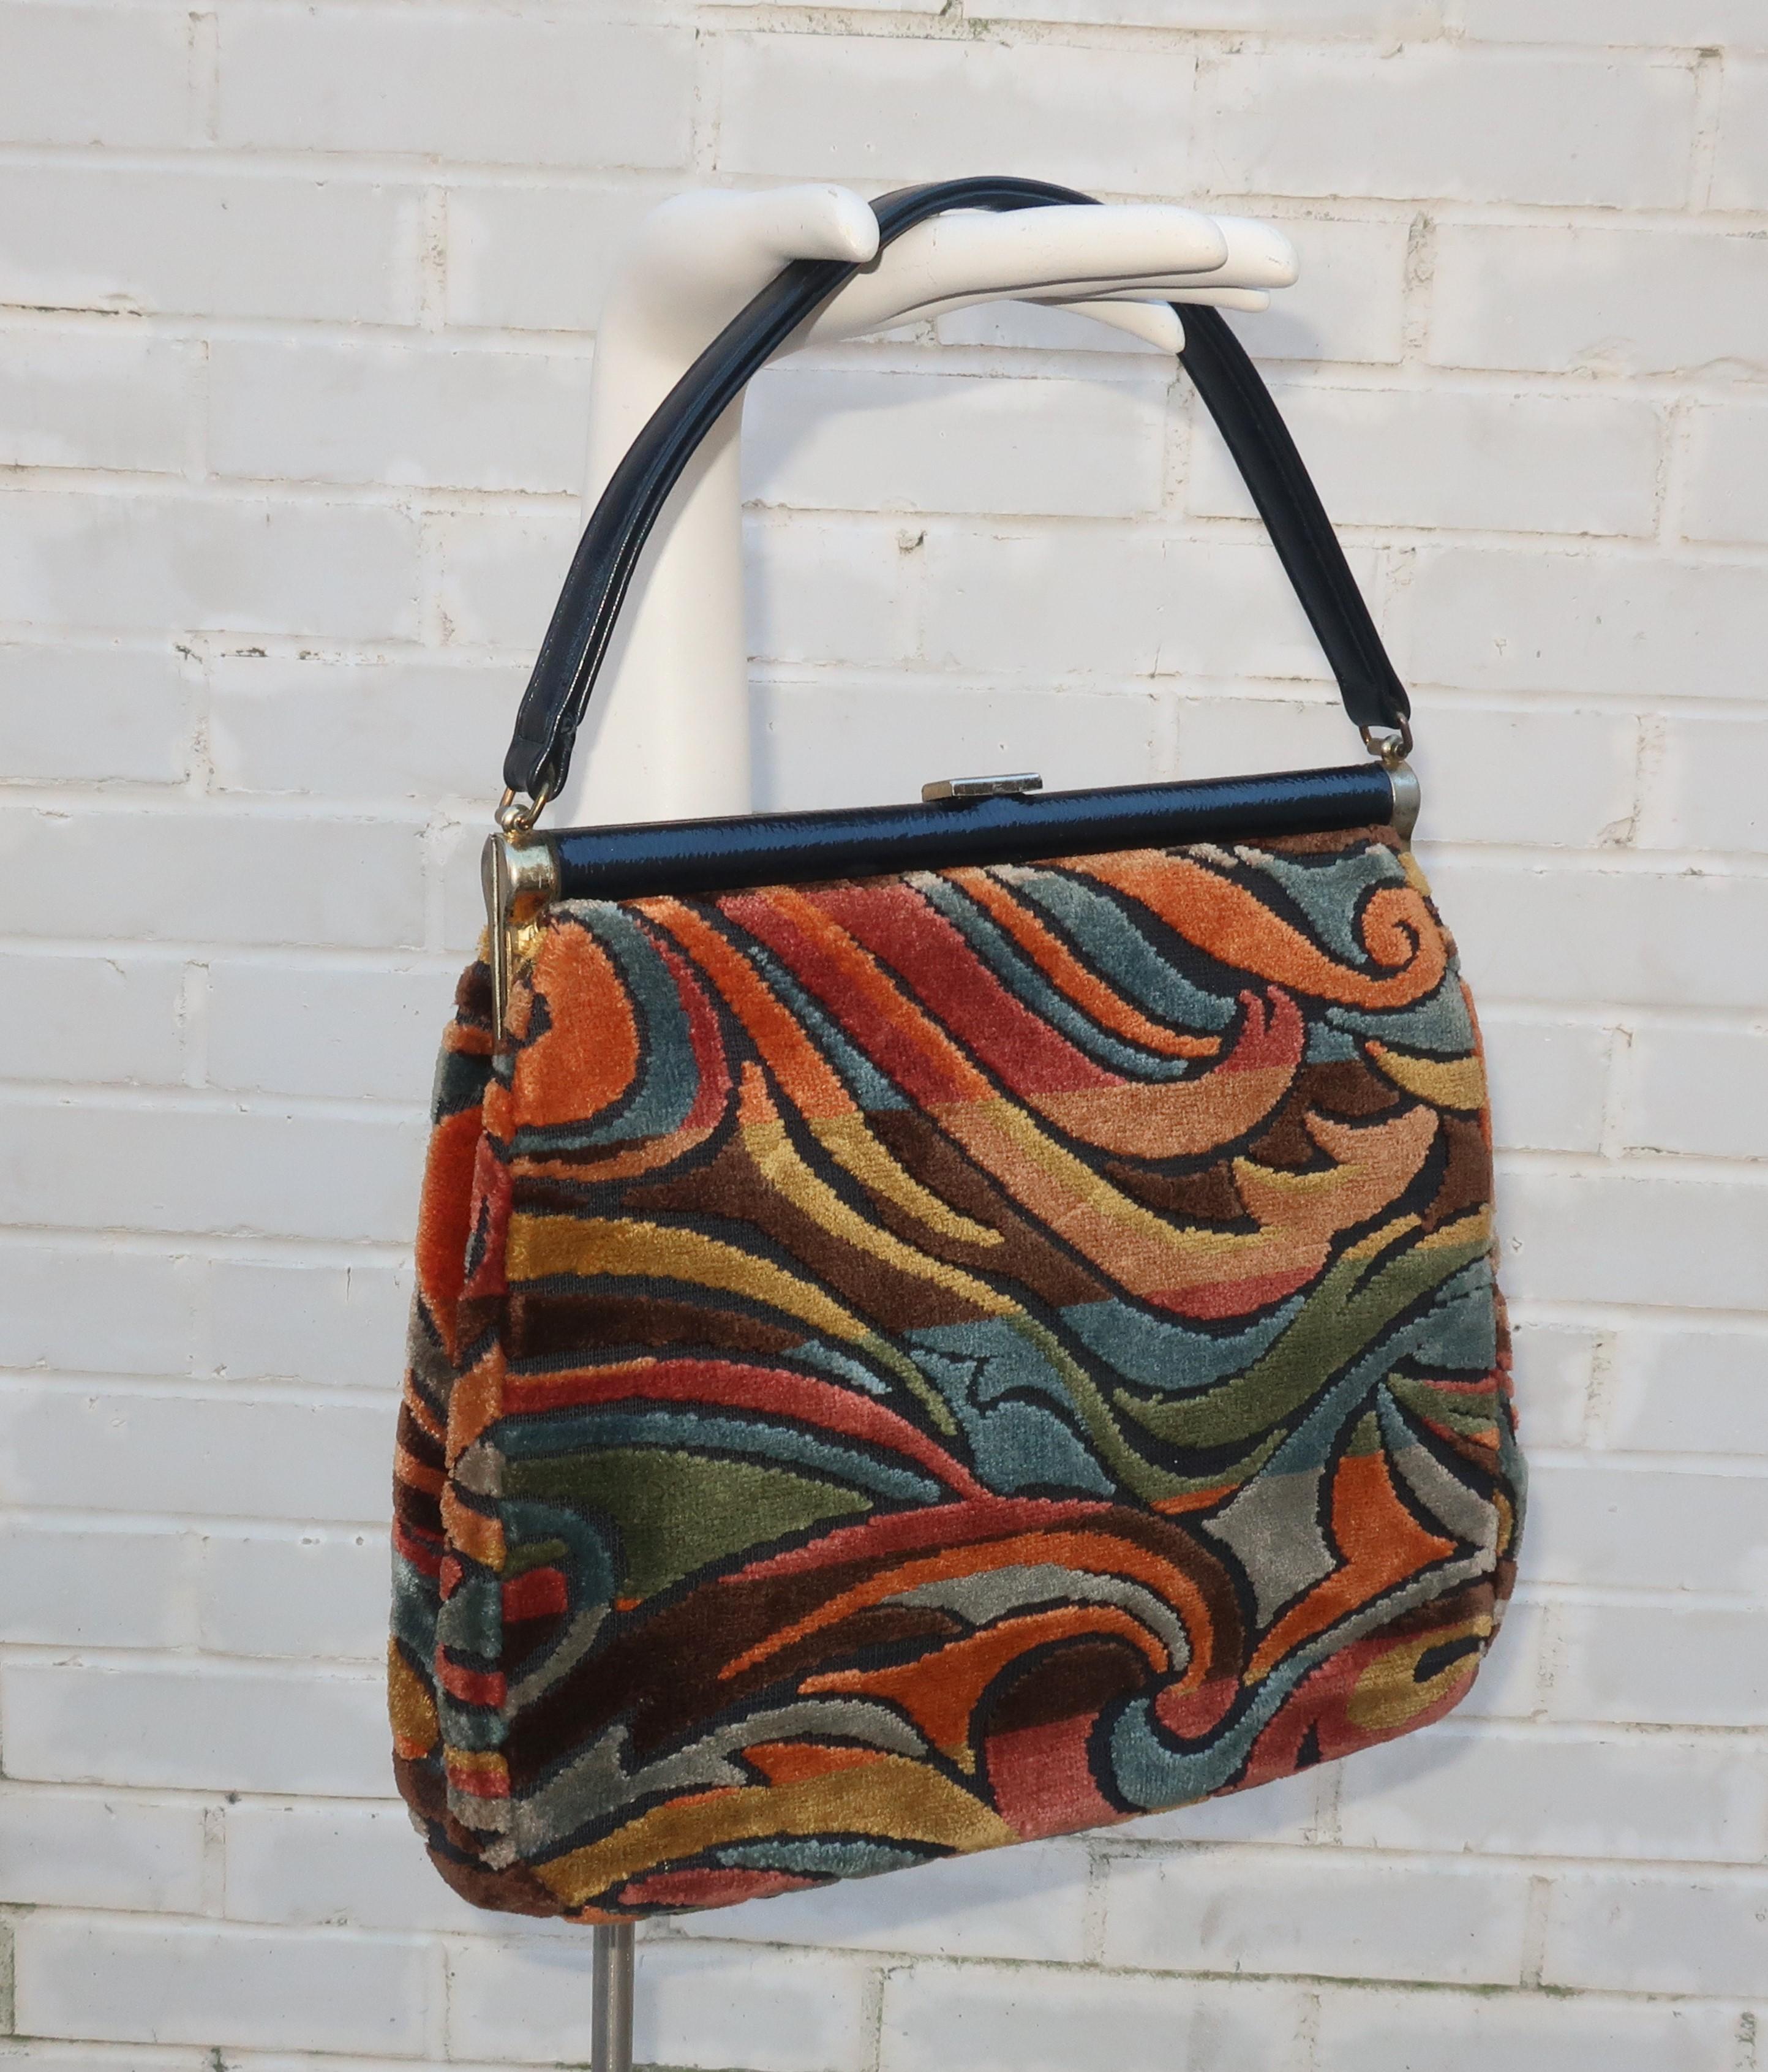 Vintage Handbag Tapestry Julius Resnick Miami JR Purse Floral 